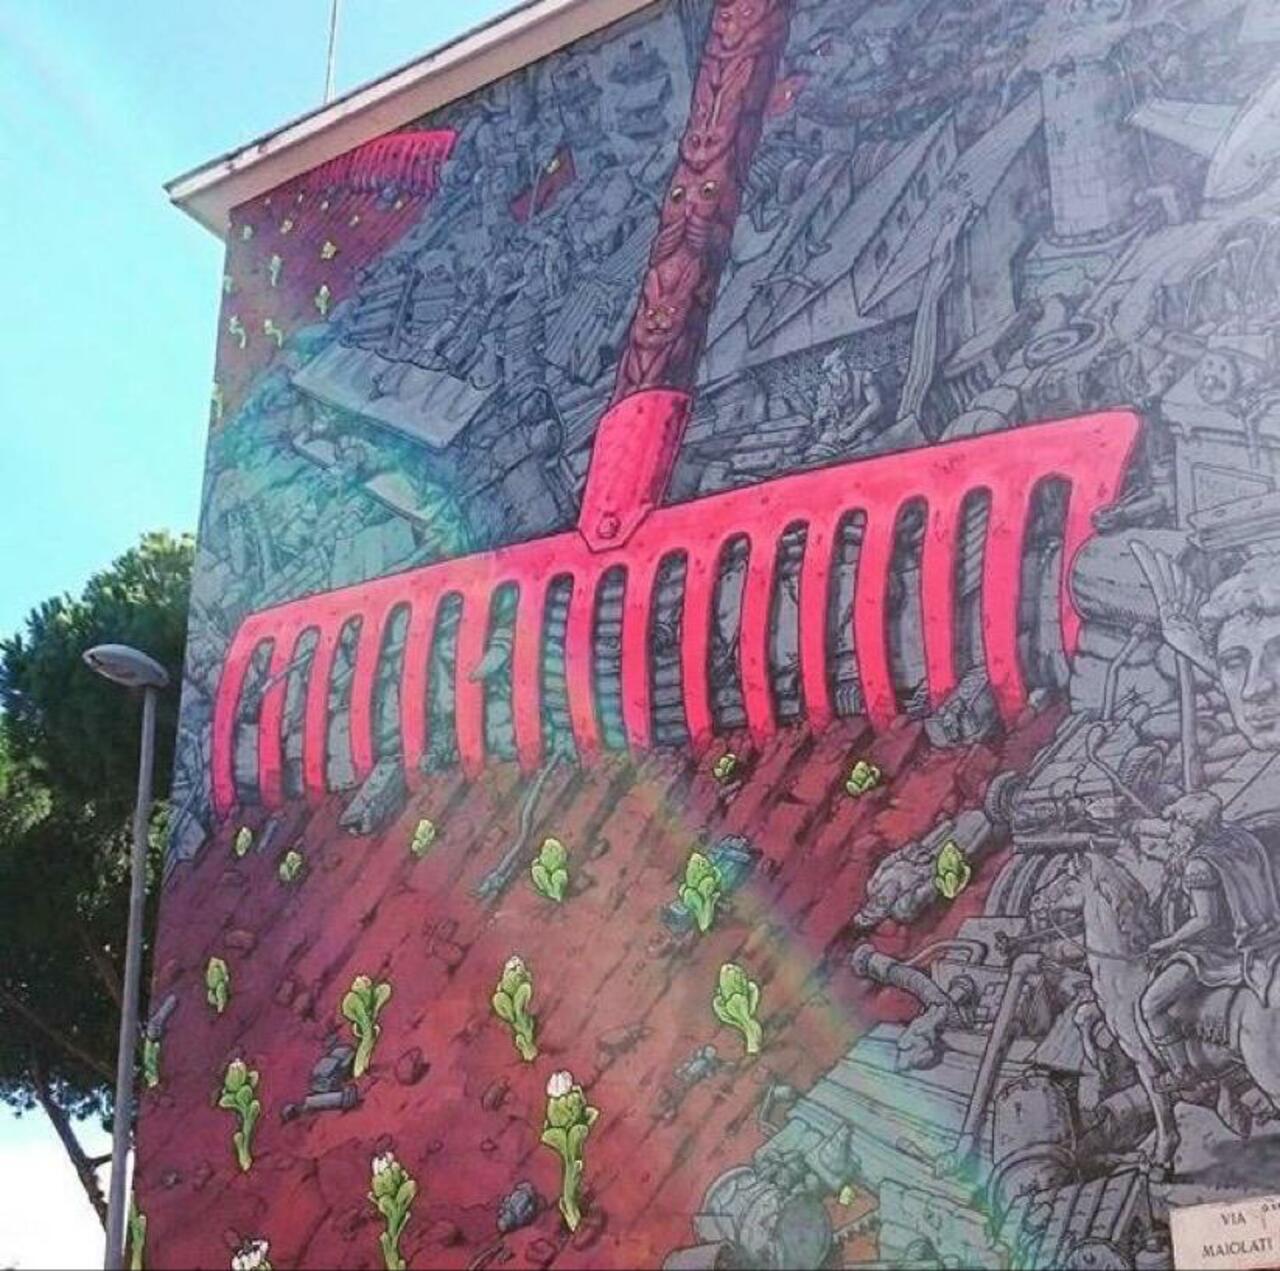 RT @AuKeats: #switch #graffiti #streetart in #rome #art #arte http://t.co/MkZdokKjqz